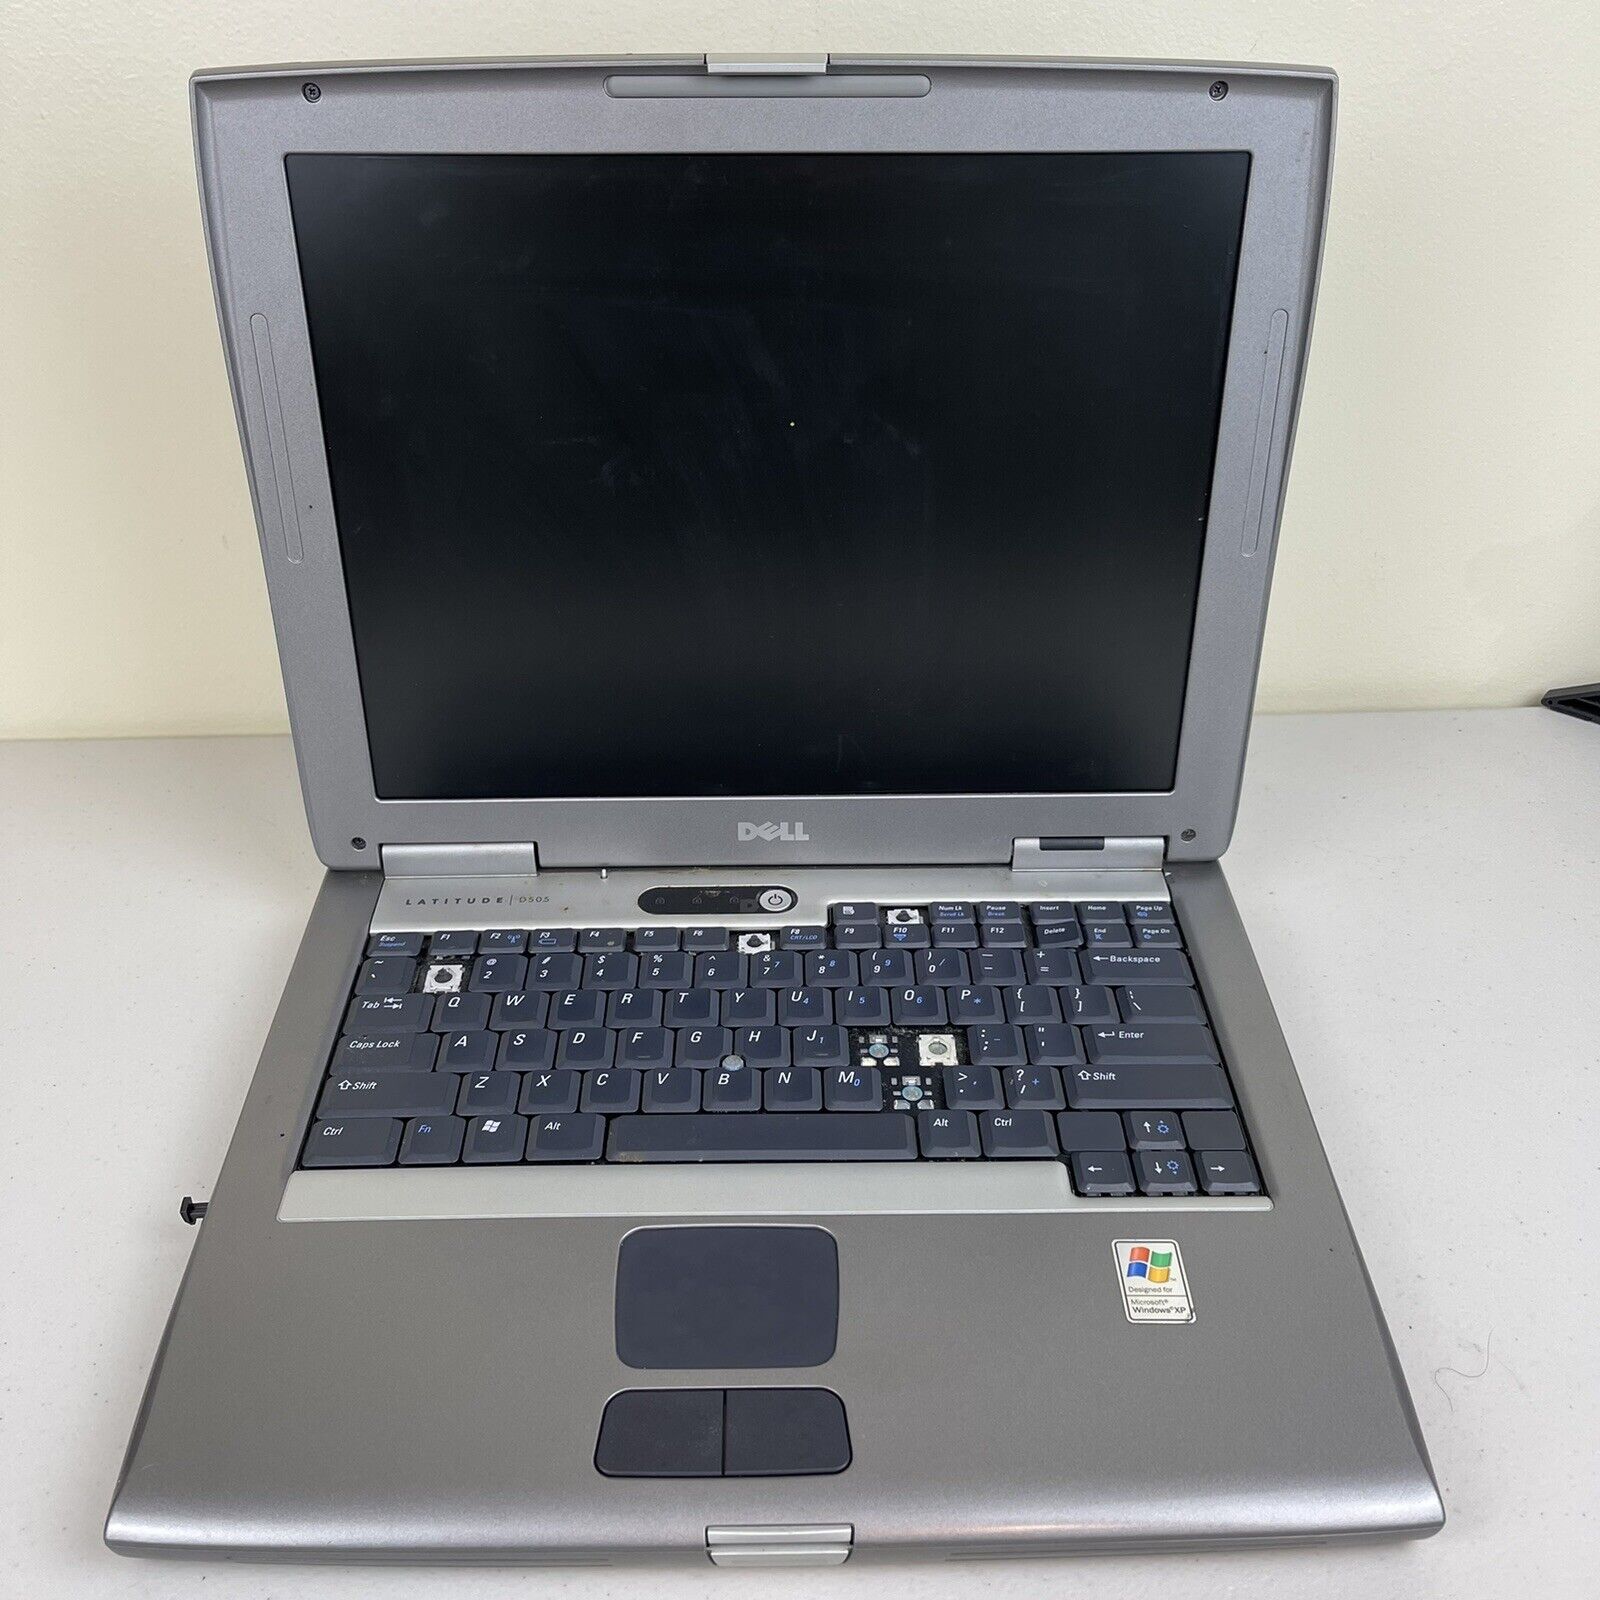 Dell Latitude D505 (Intel Processor) Laptop - Vintage - Untested